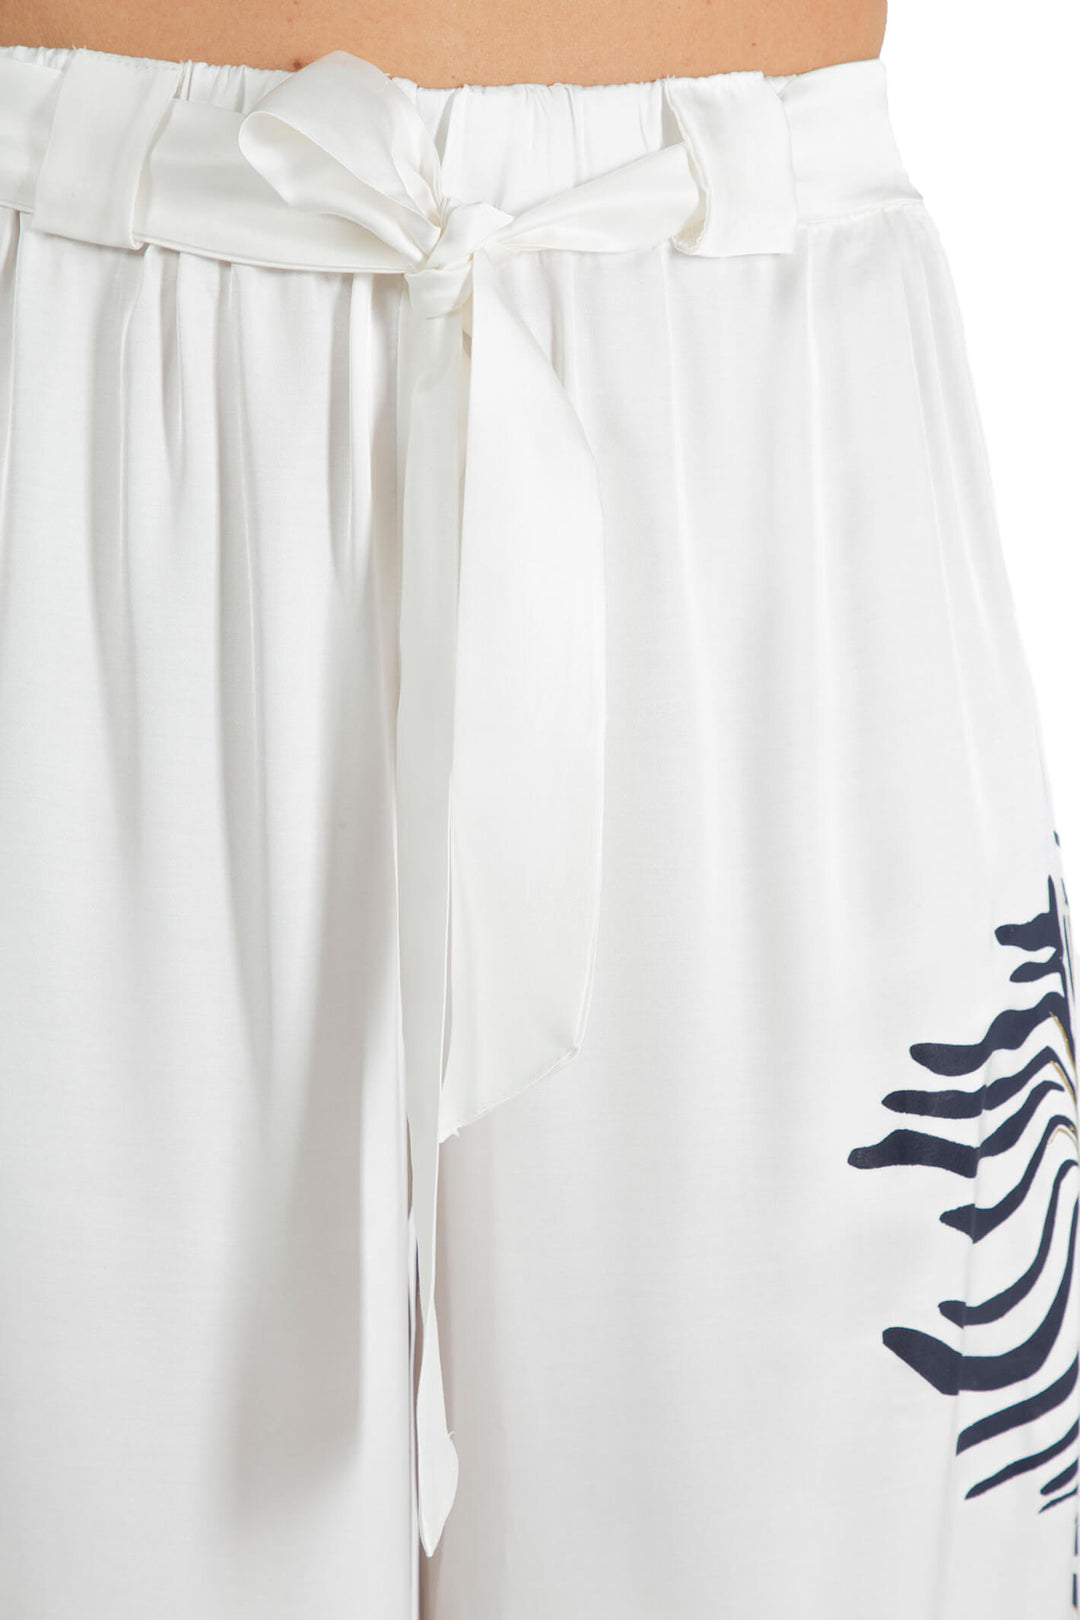 Elisa Cavaletti ELP236027105 White Print Wide Leg Trousers - Experience Boutique